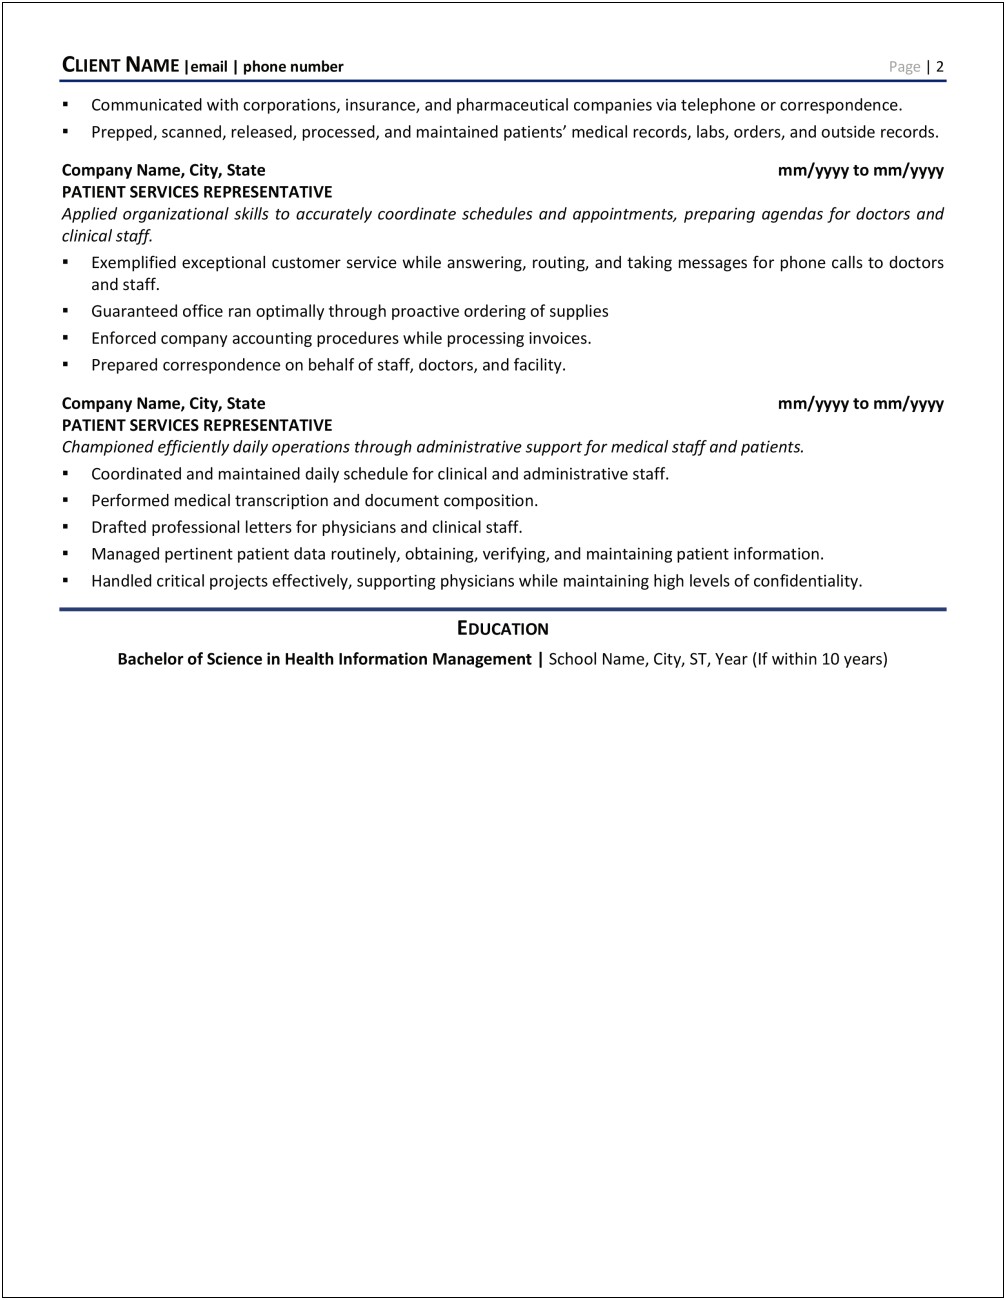 Resume Objective For Hospital Call Center